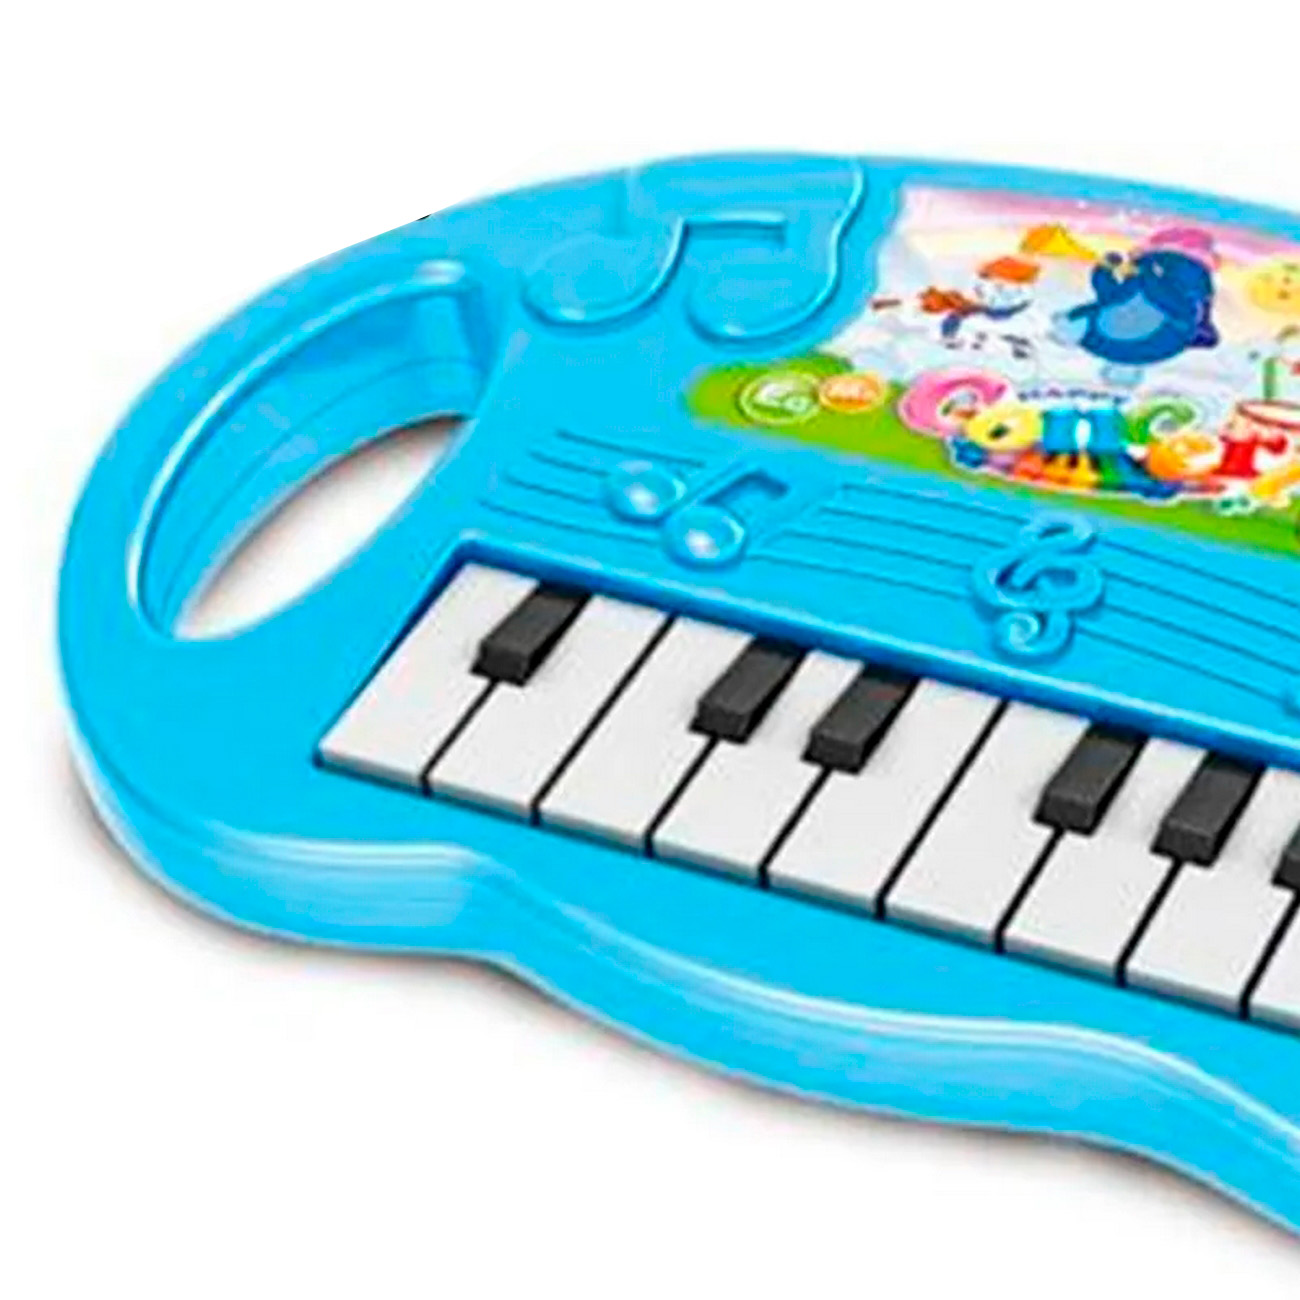 Piano Organeta Interactivo Musical Bebes Niños + Bateria